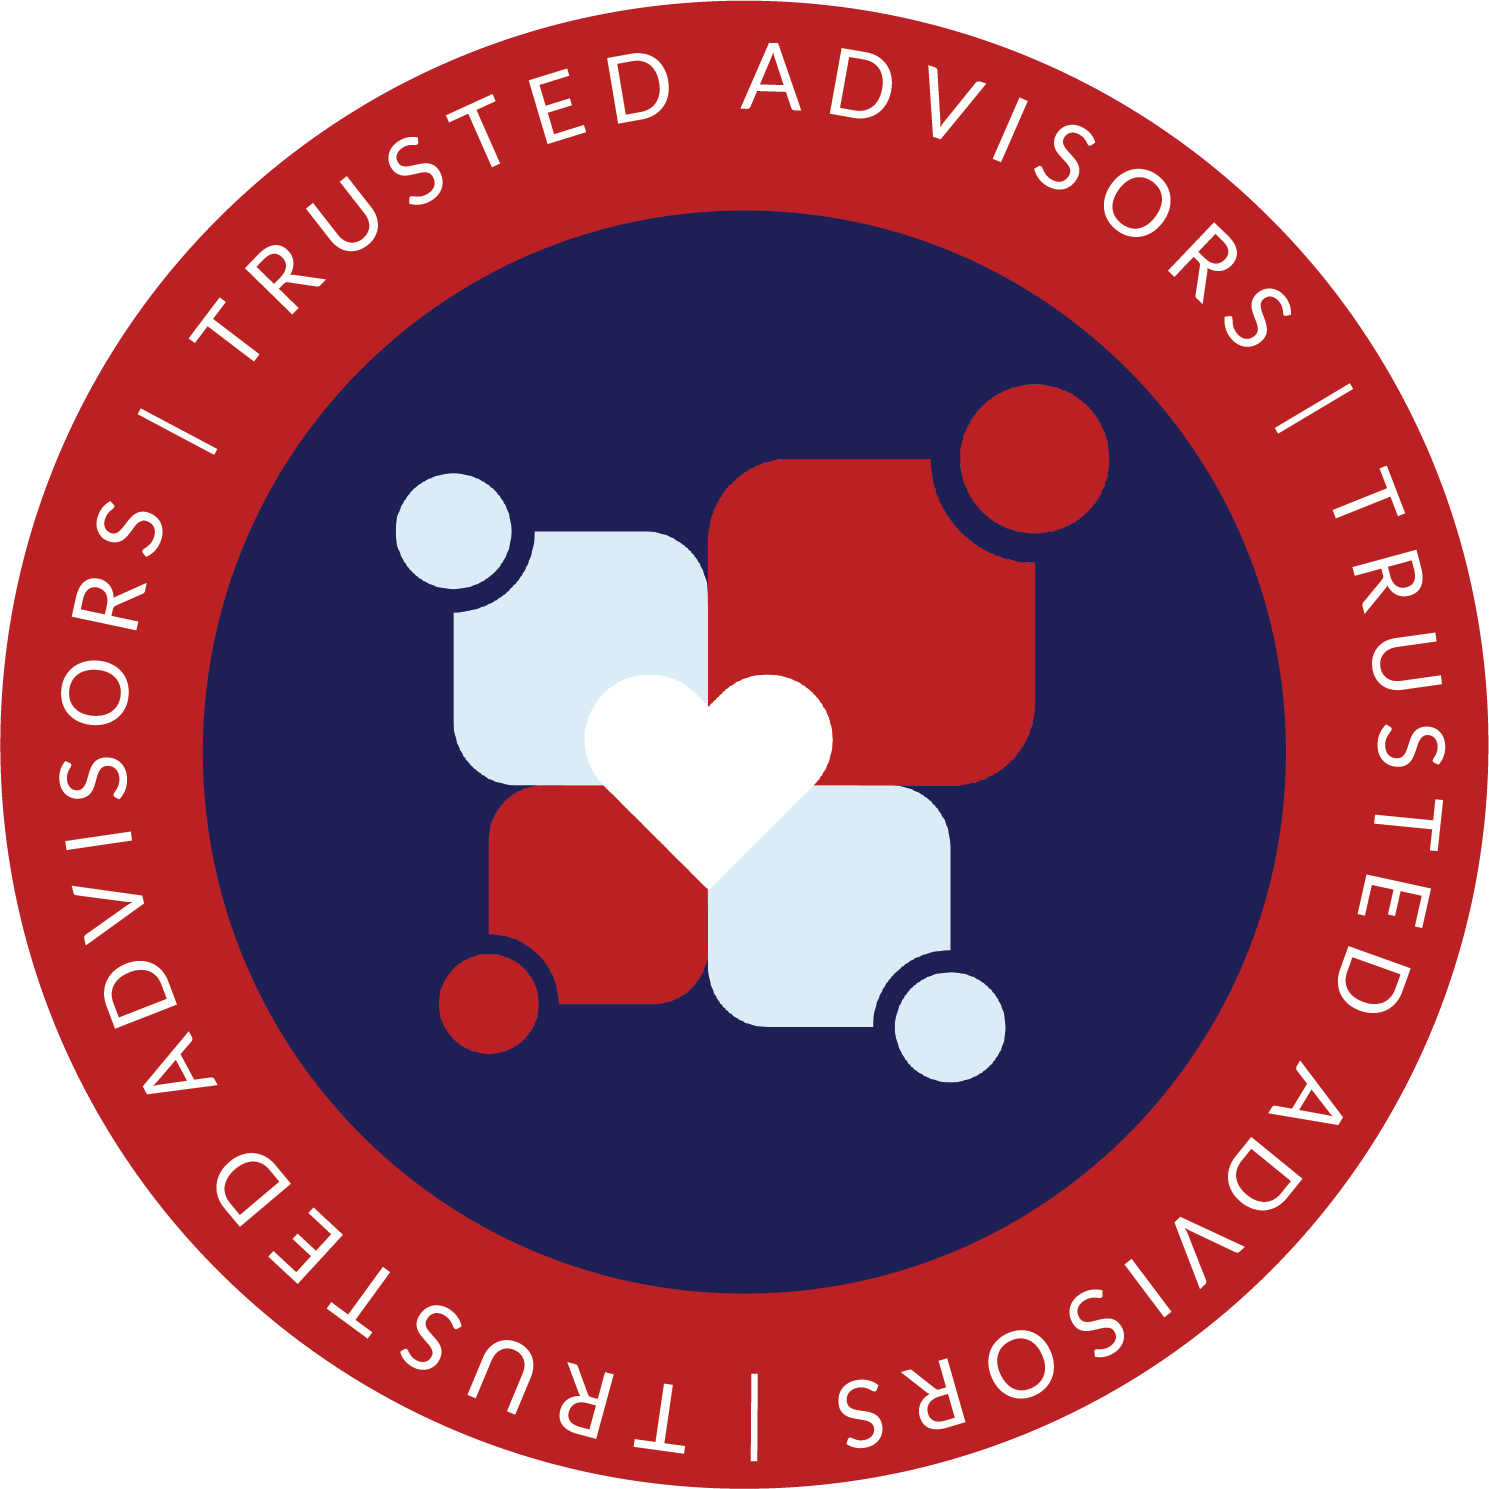 Trusted Advisors: Health, Life &amp; Medicare